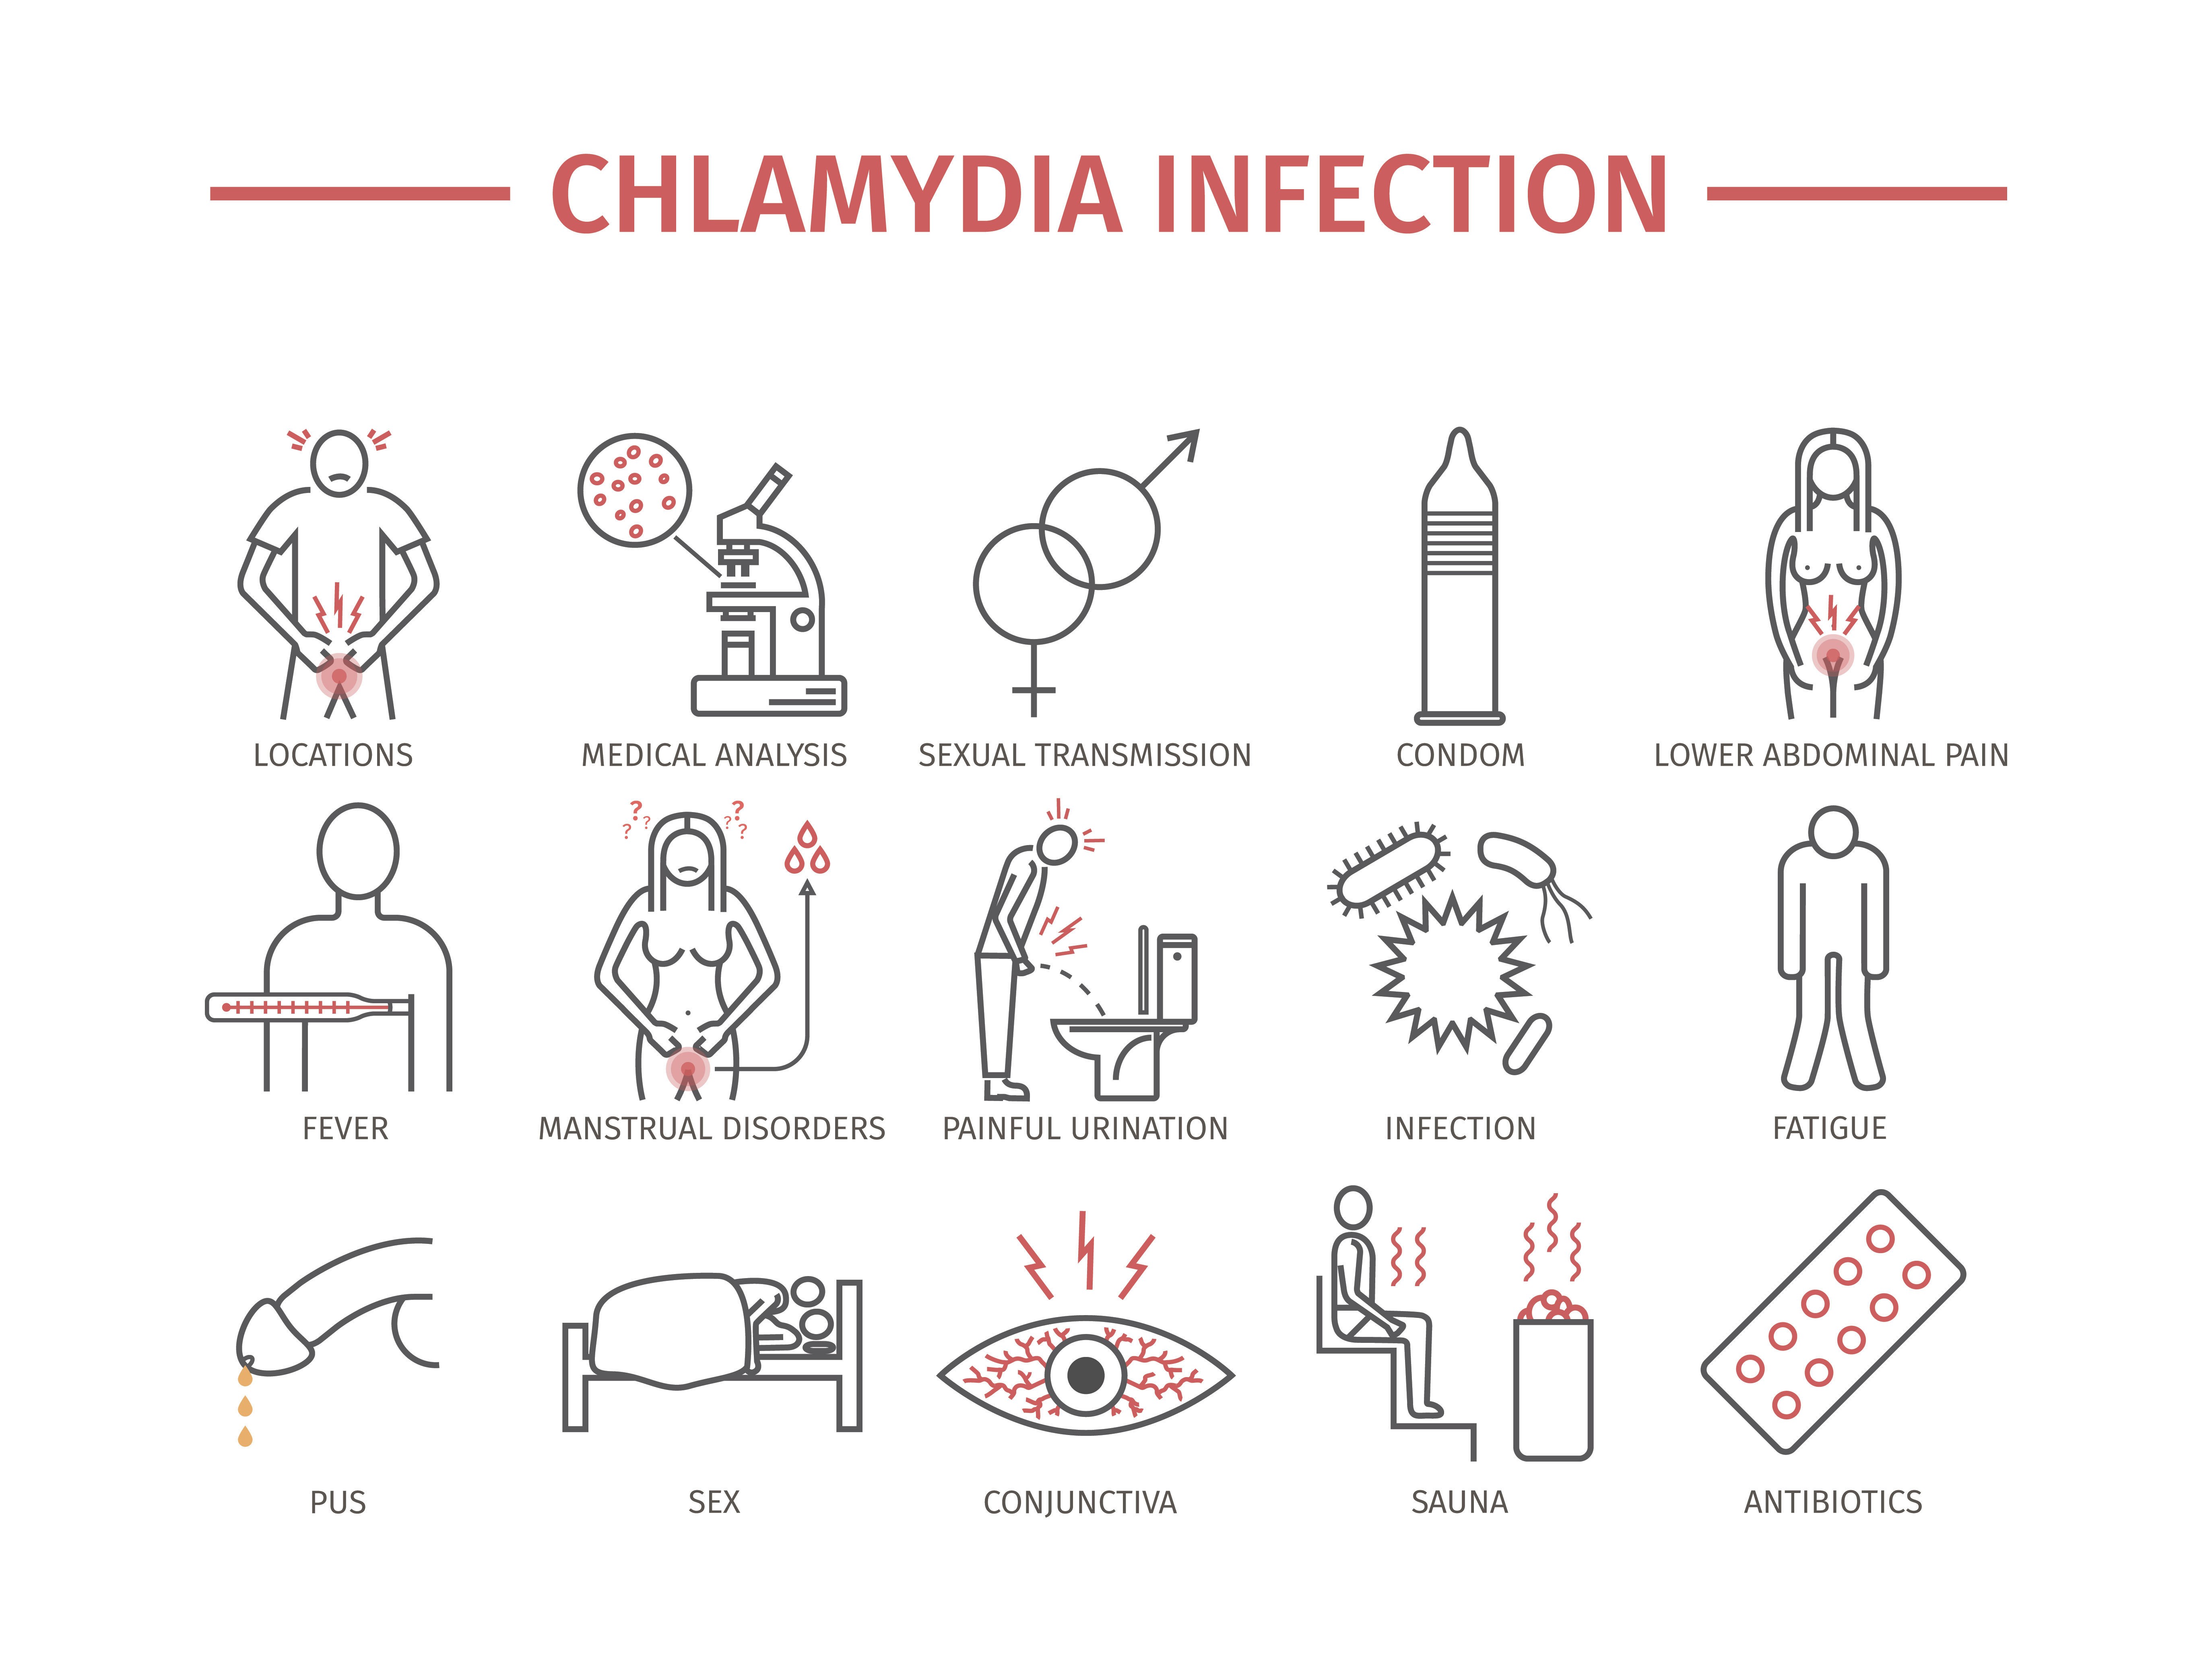 Chlamydia Symptoms, Pictures, Treatment - STD Chlamydia